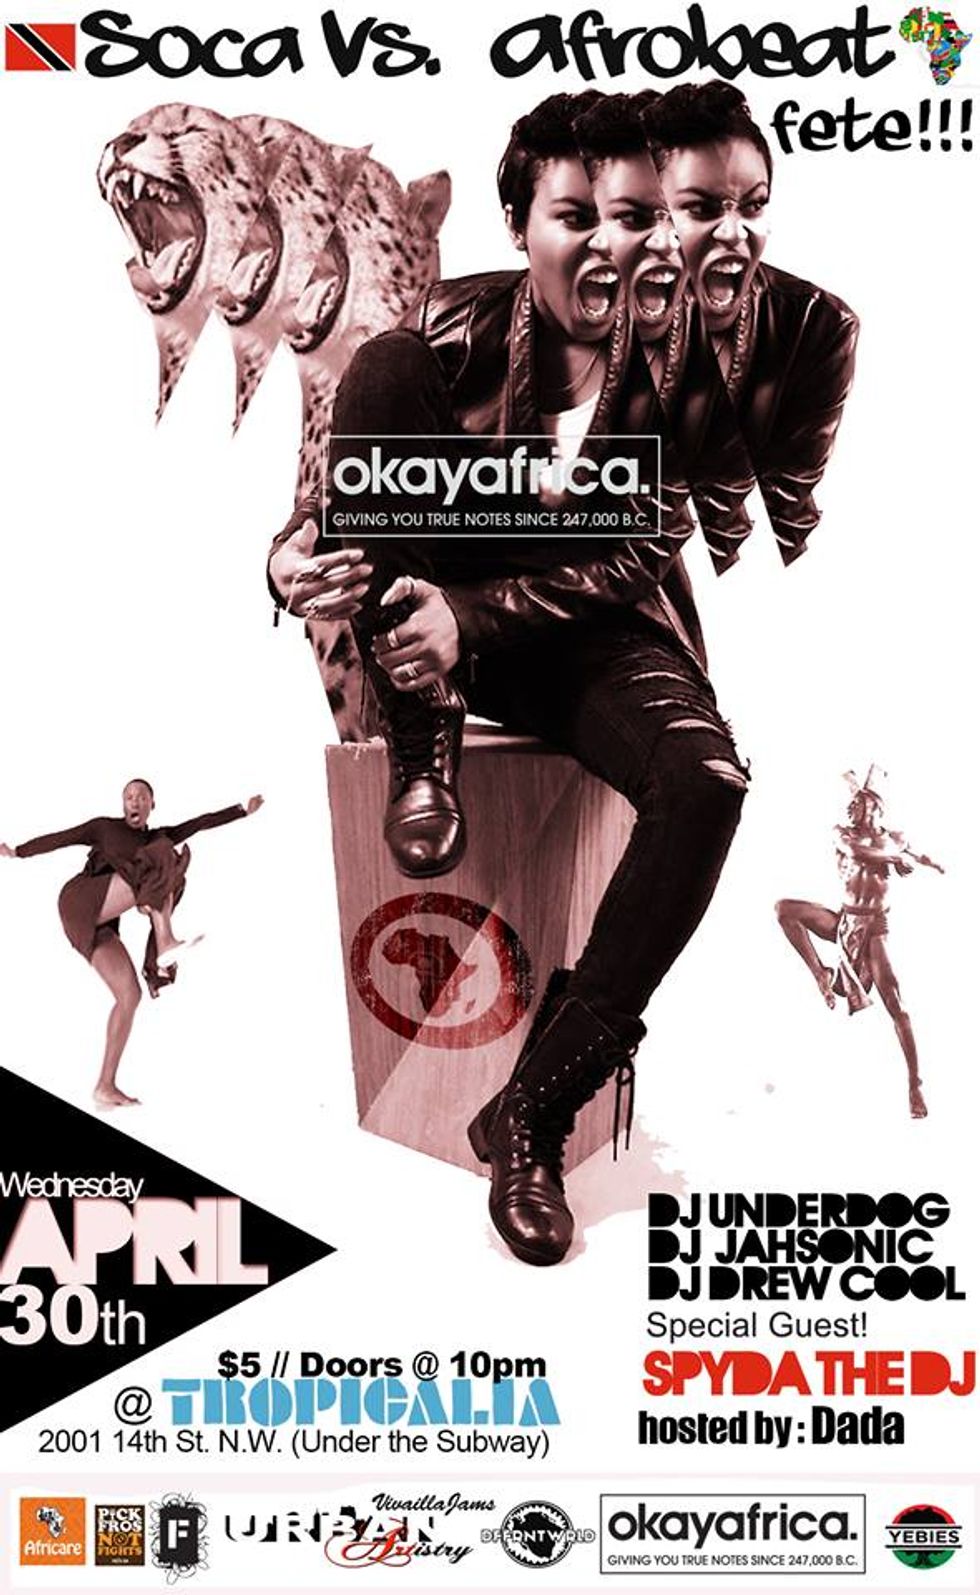 #OKAYAFRICADC Soca Vs. Afrobeat Special!